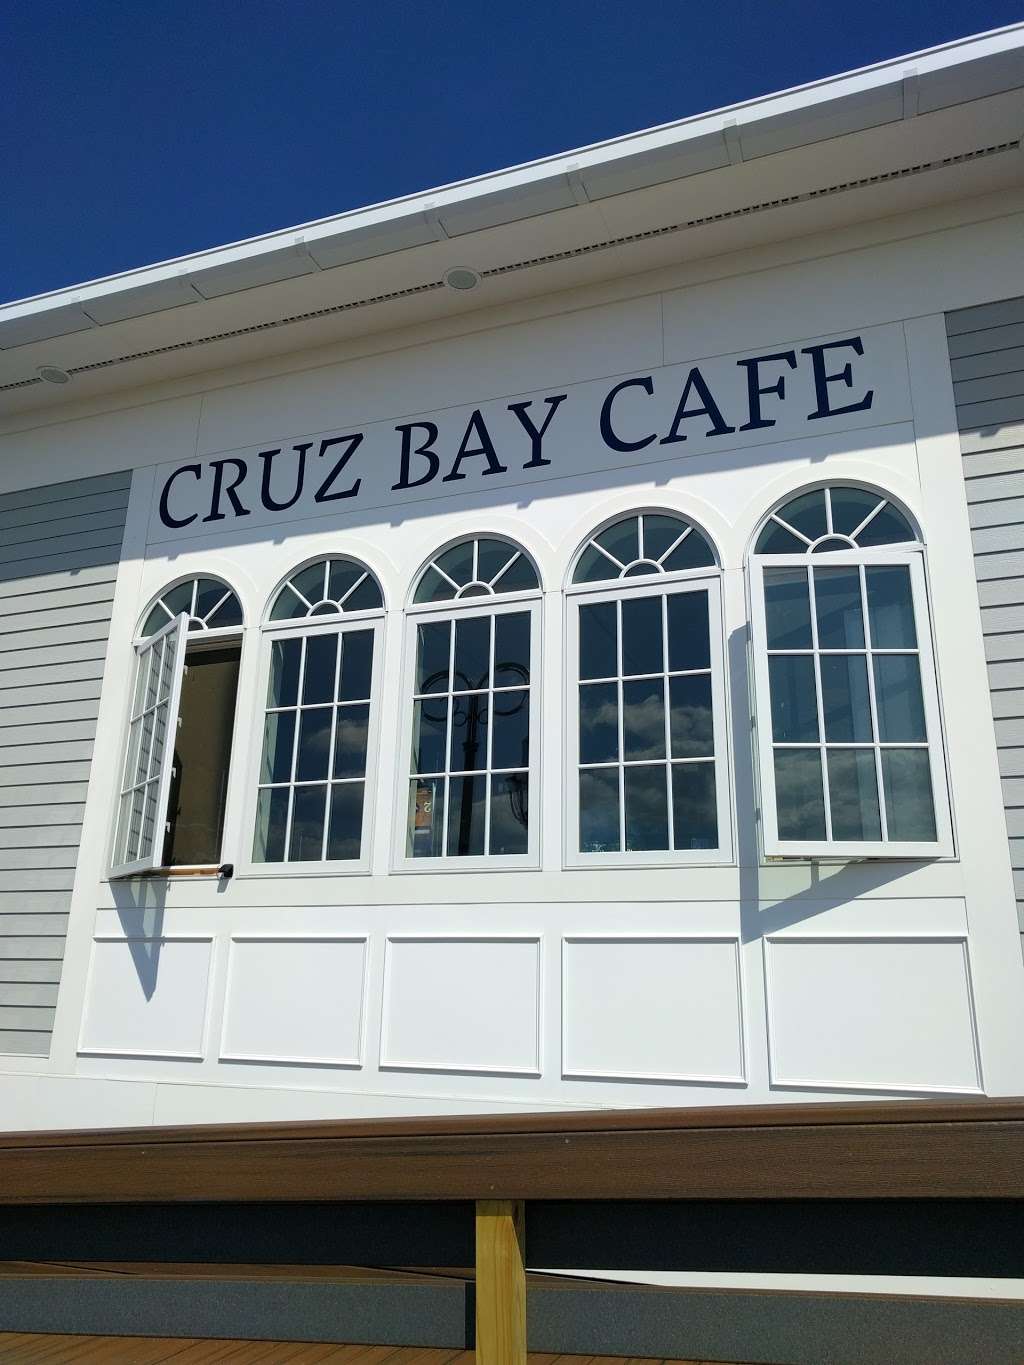 Cruz Bay Café | 500 Ocean Ave, Belmar, NJ 07719 | Phone: (732) 280-1990